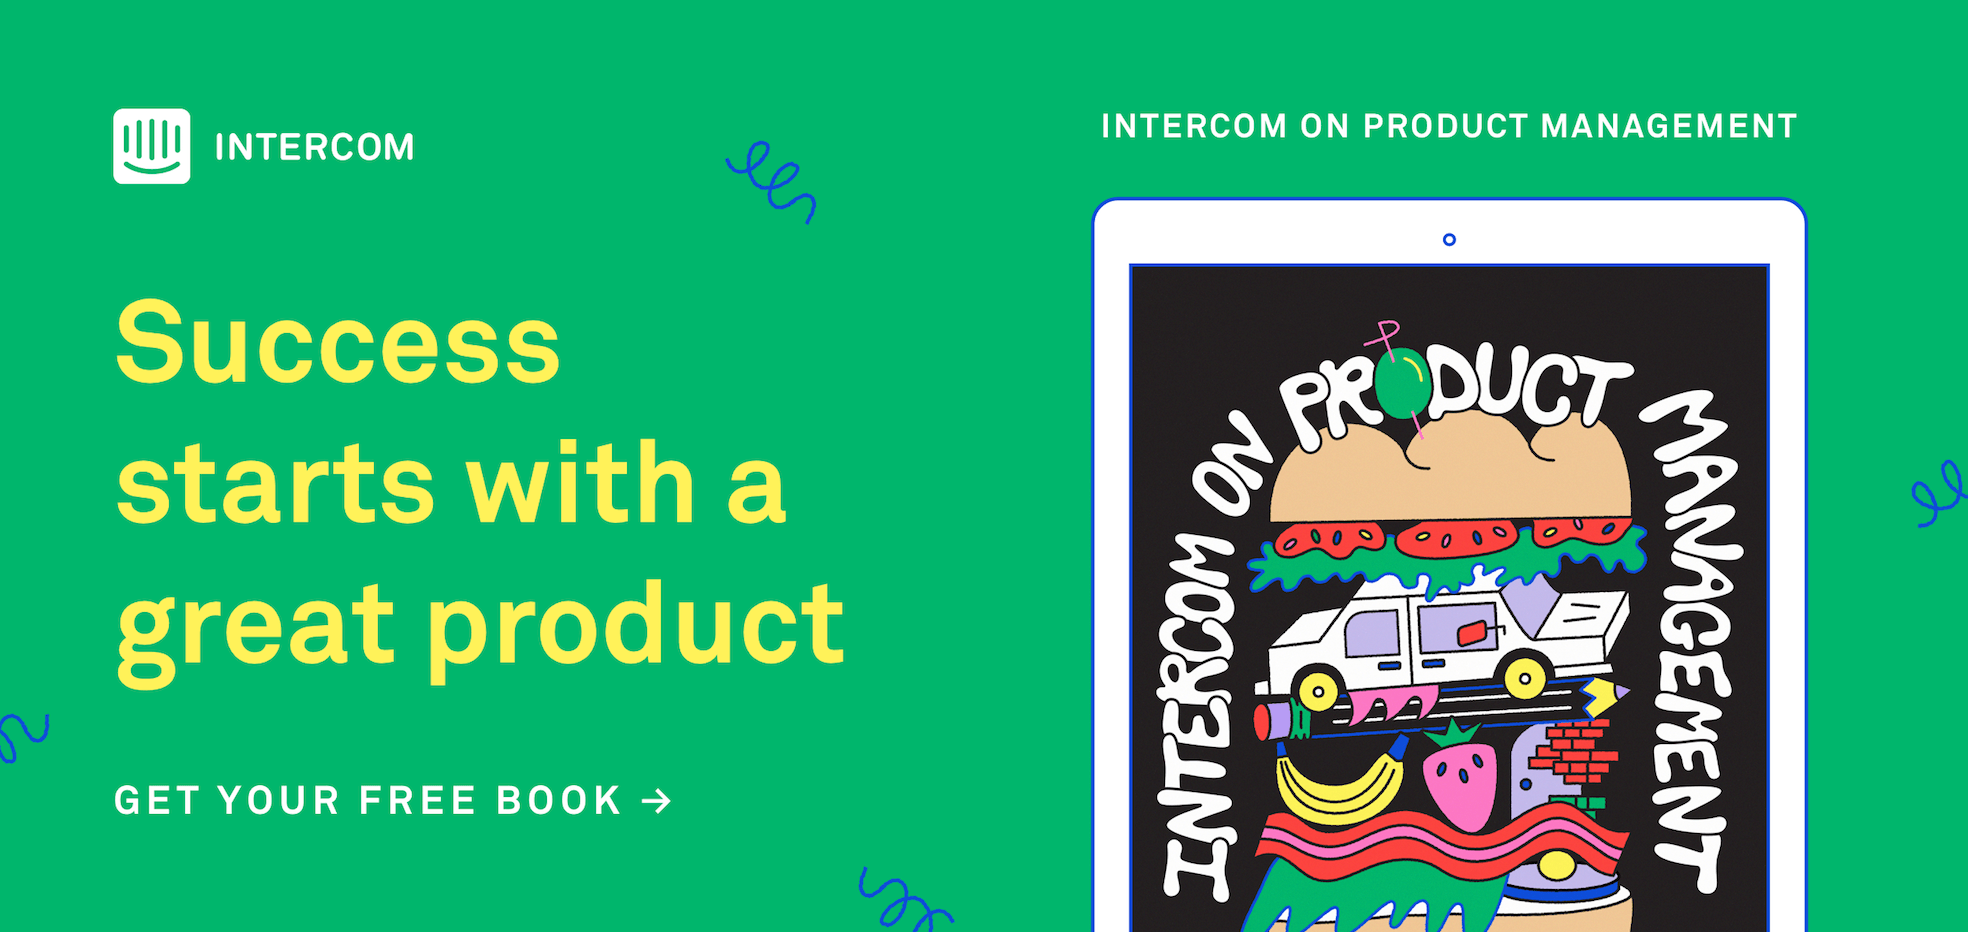 Intercom on Product Management book